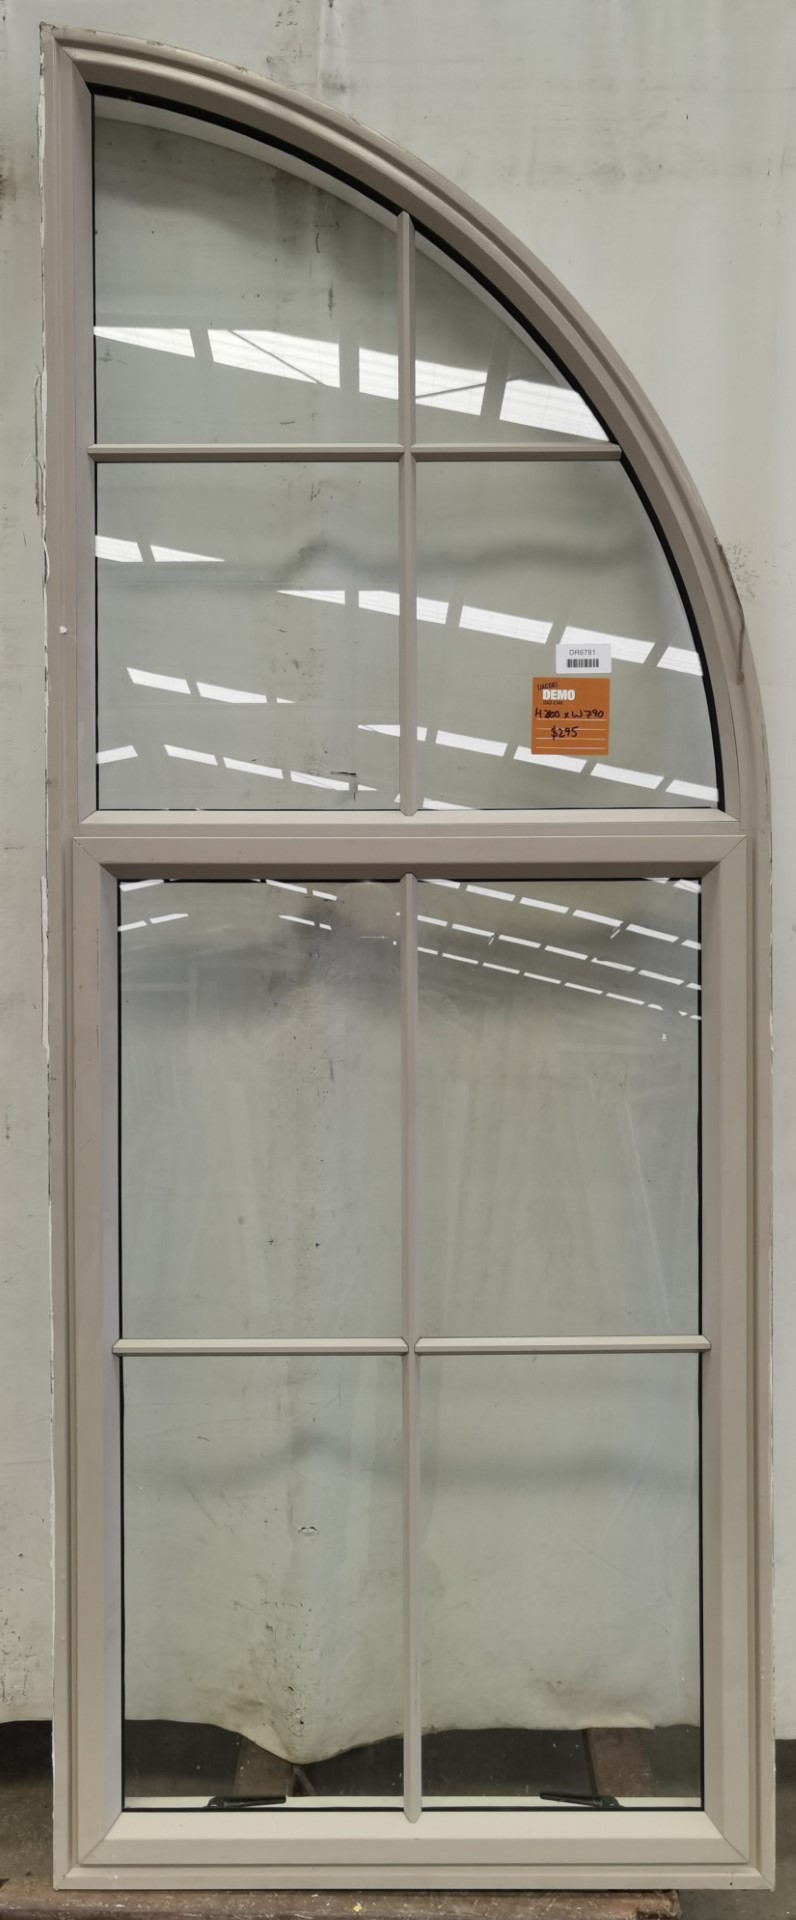 Bronco aluminium single colonial quadrant awning window